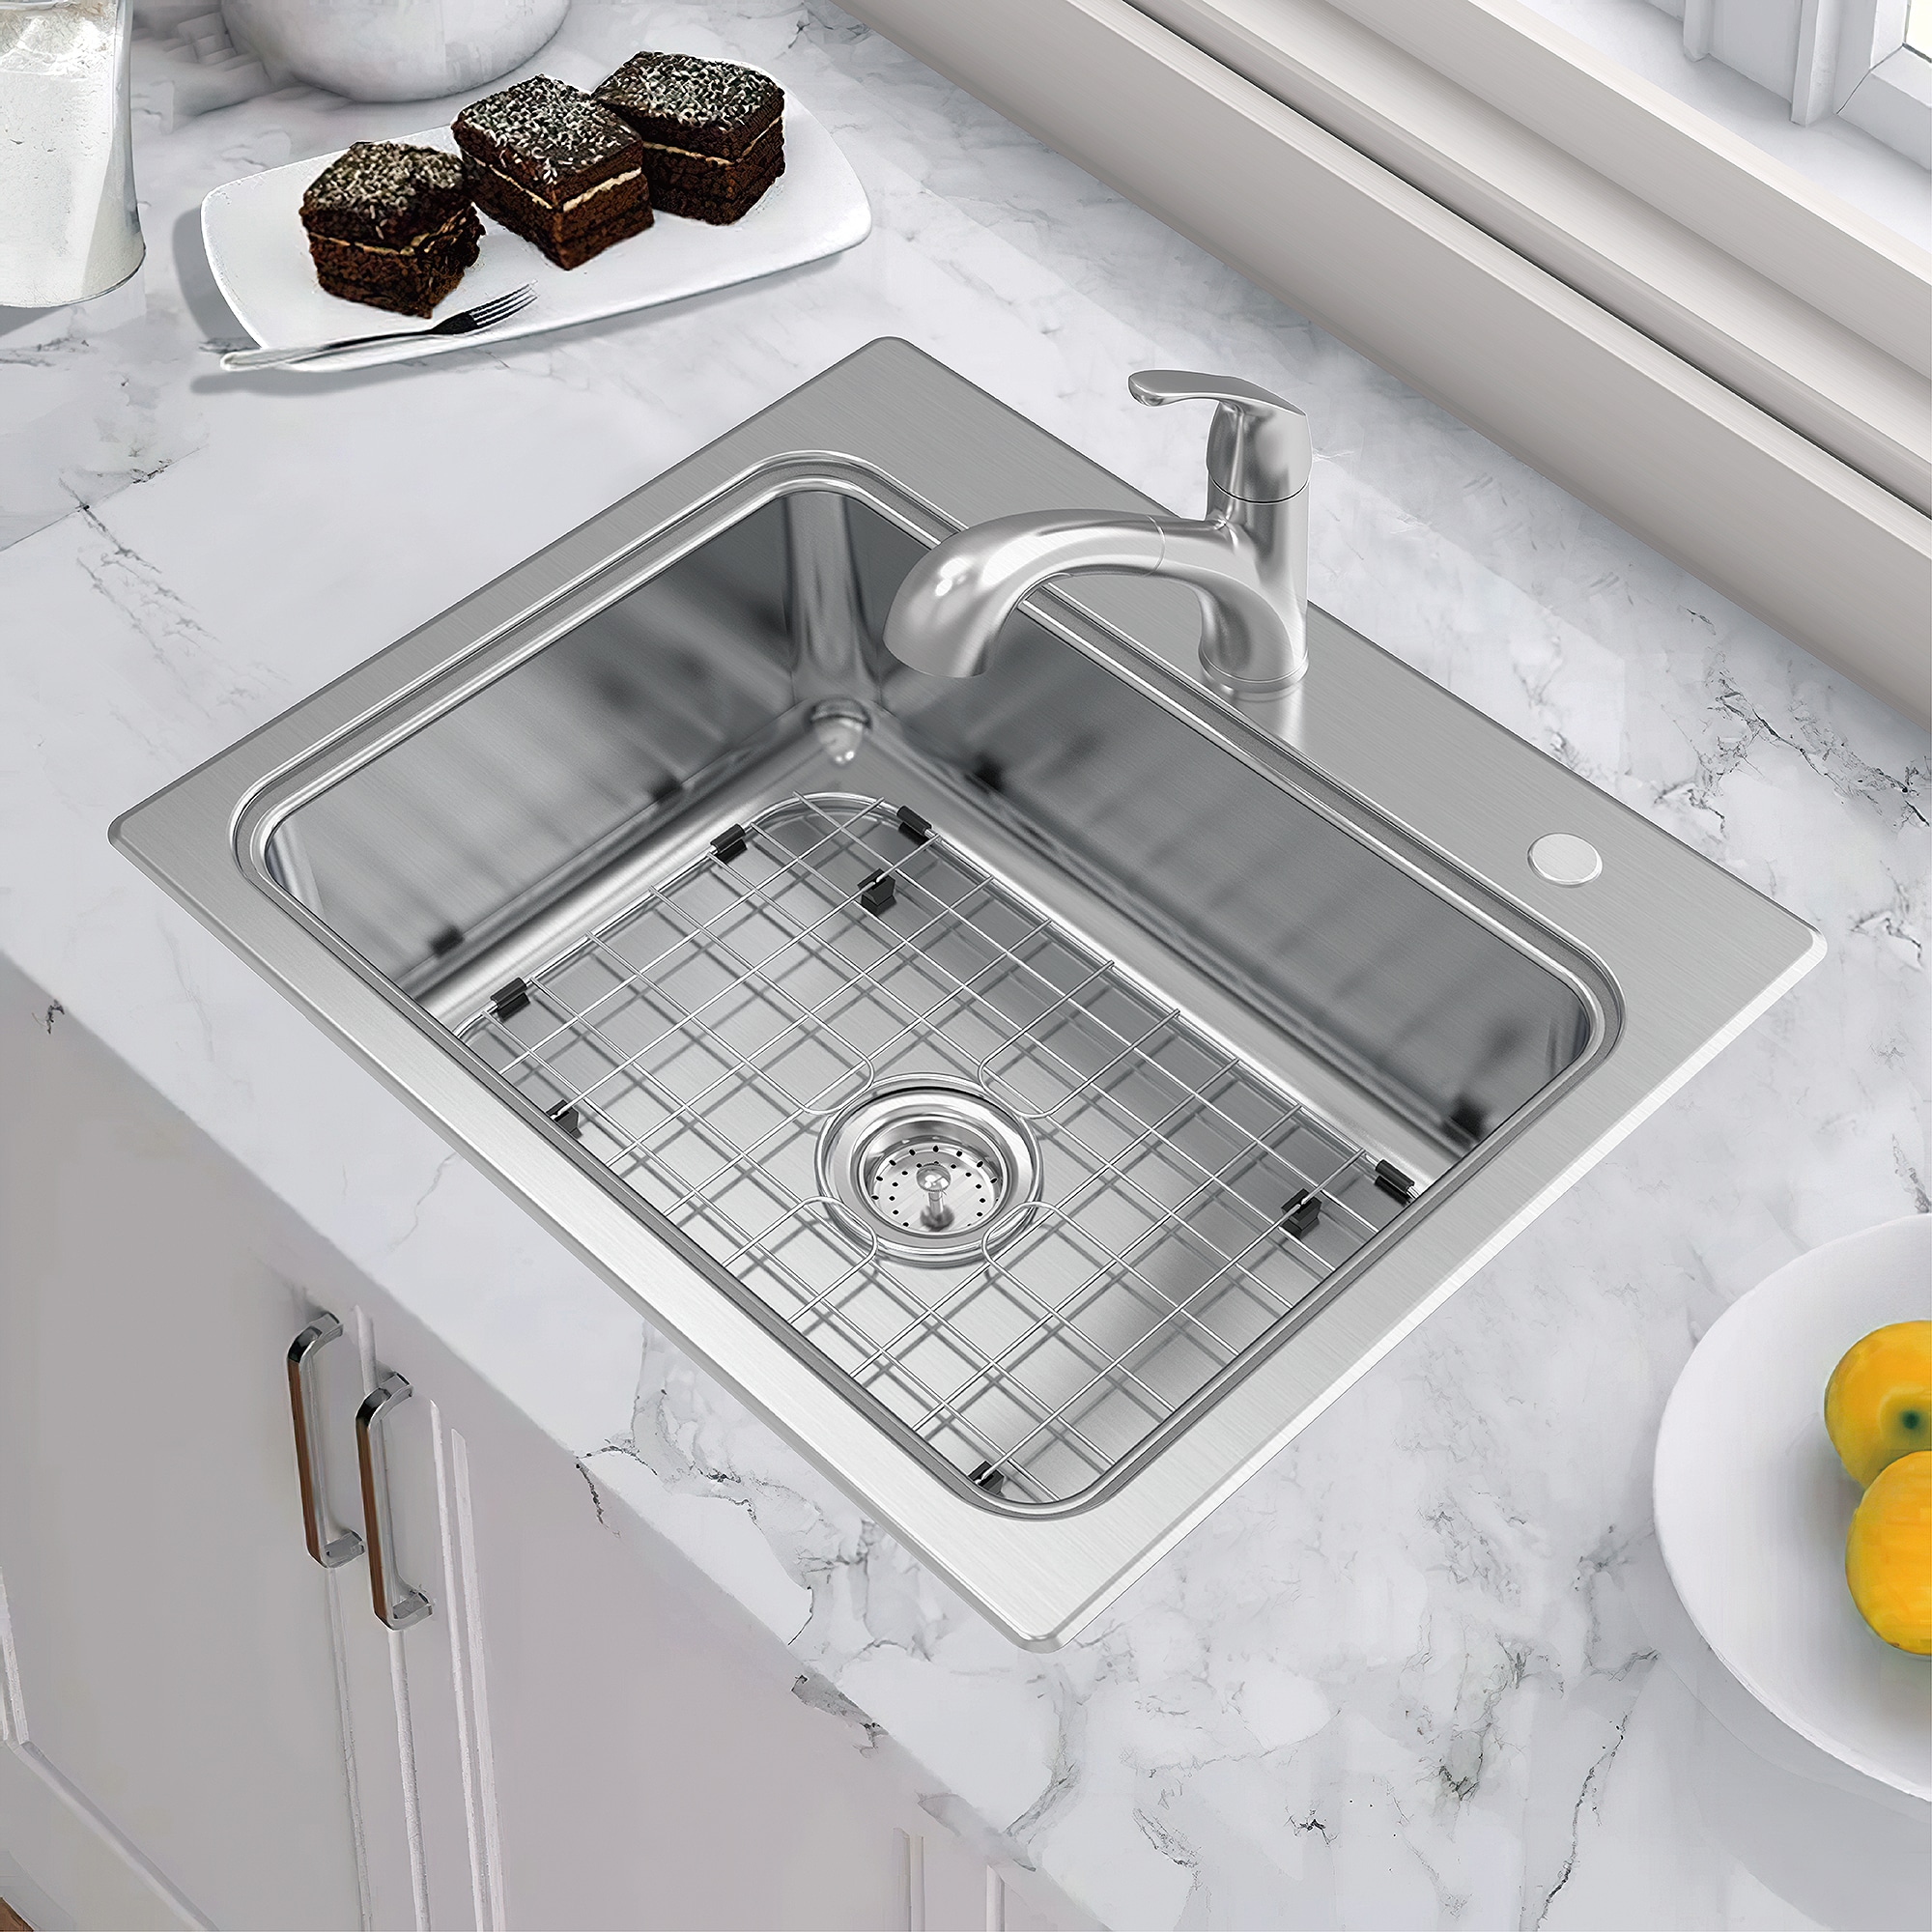 Catering Standing Stainless Steel Sink Kitchen Washing Bowls W/ Worktop Drainer 